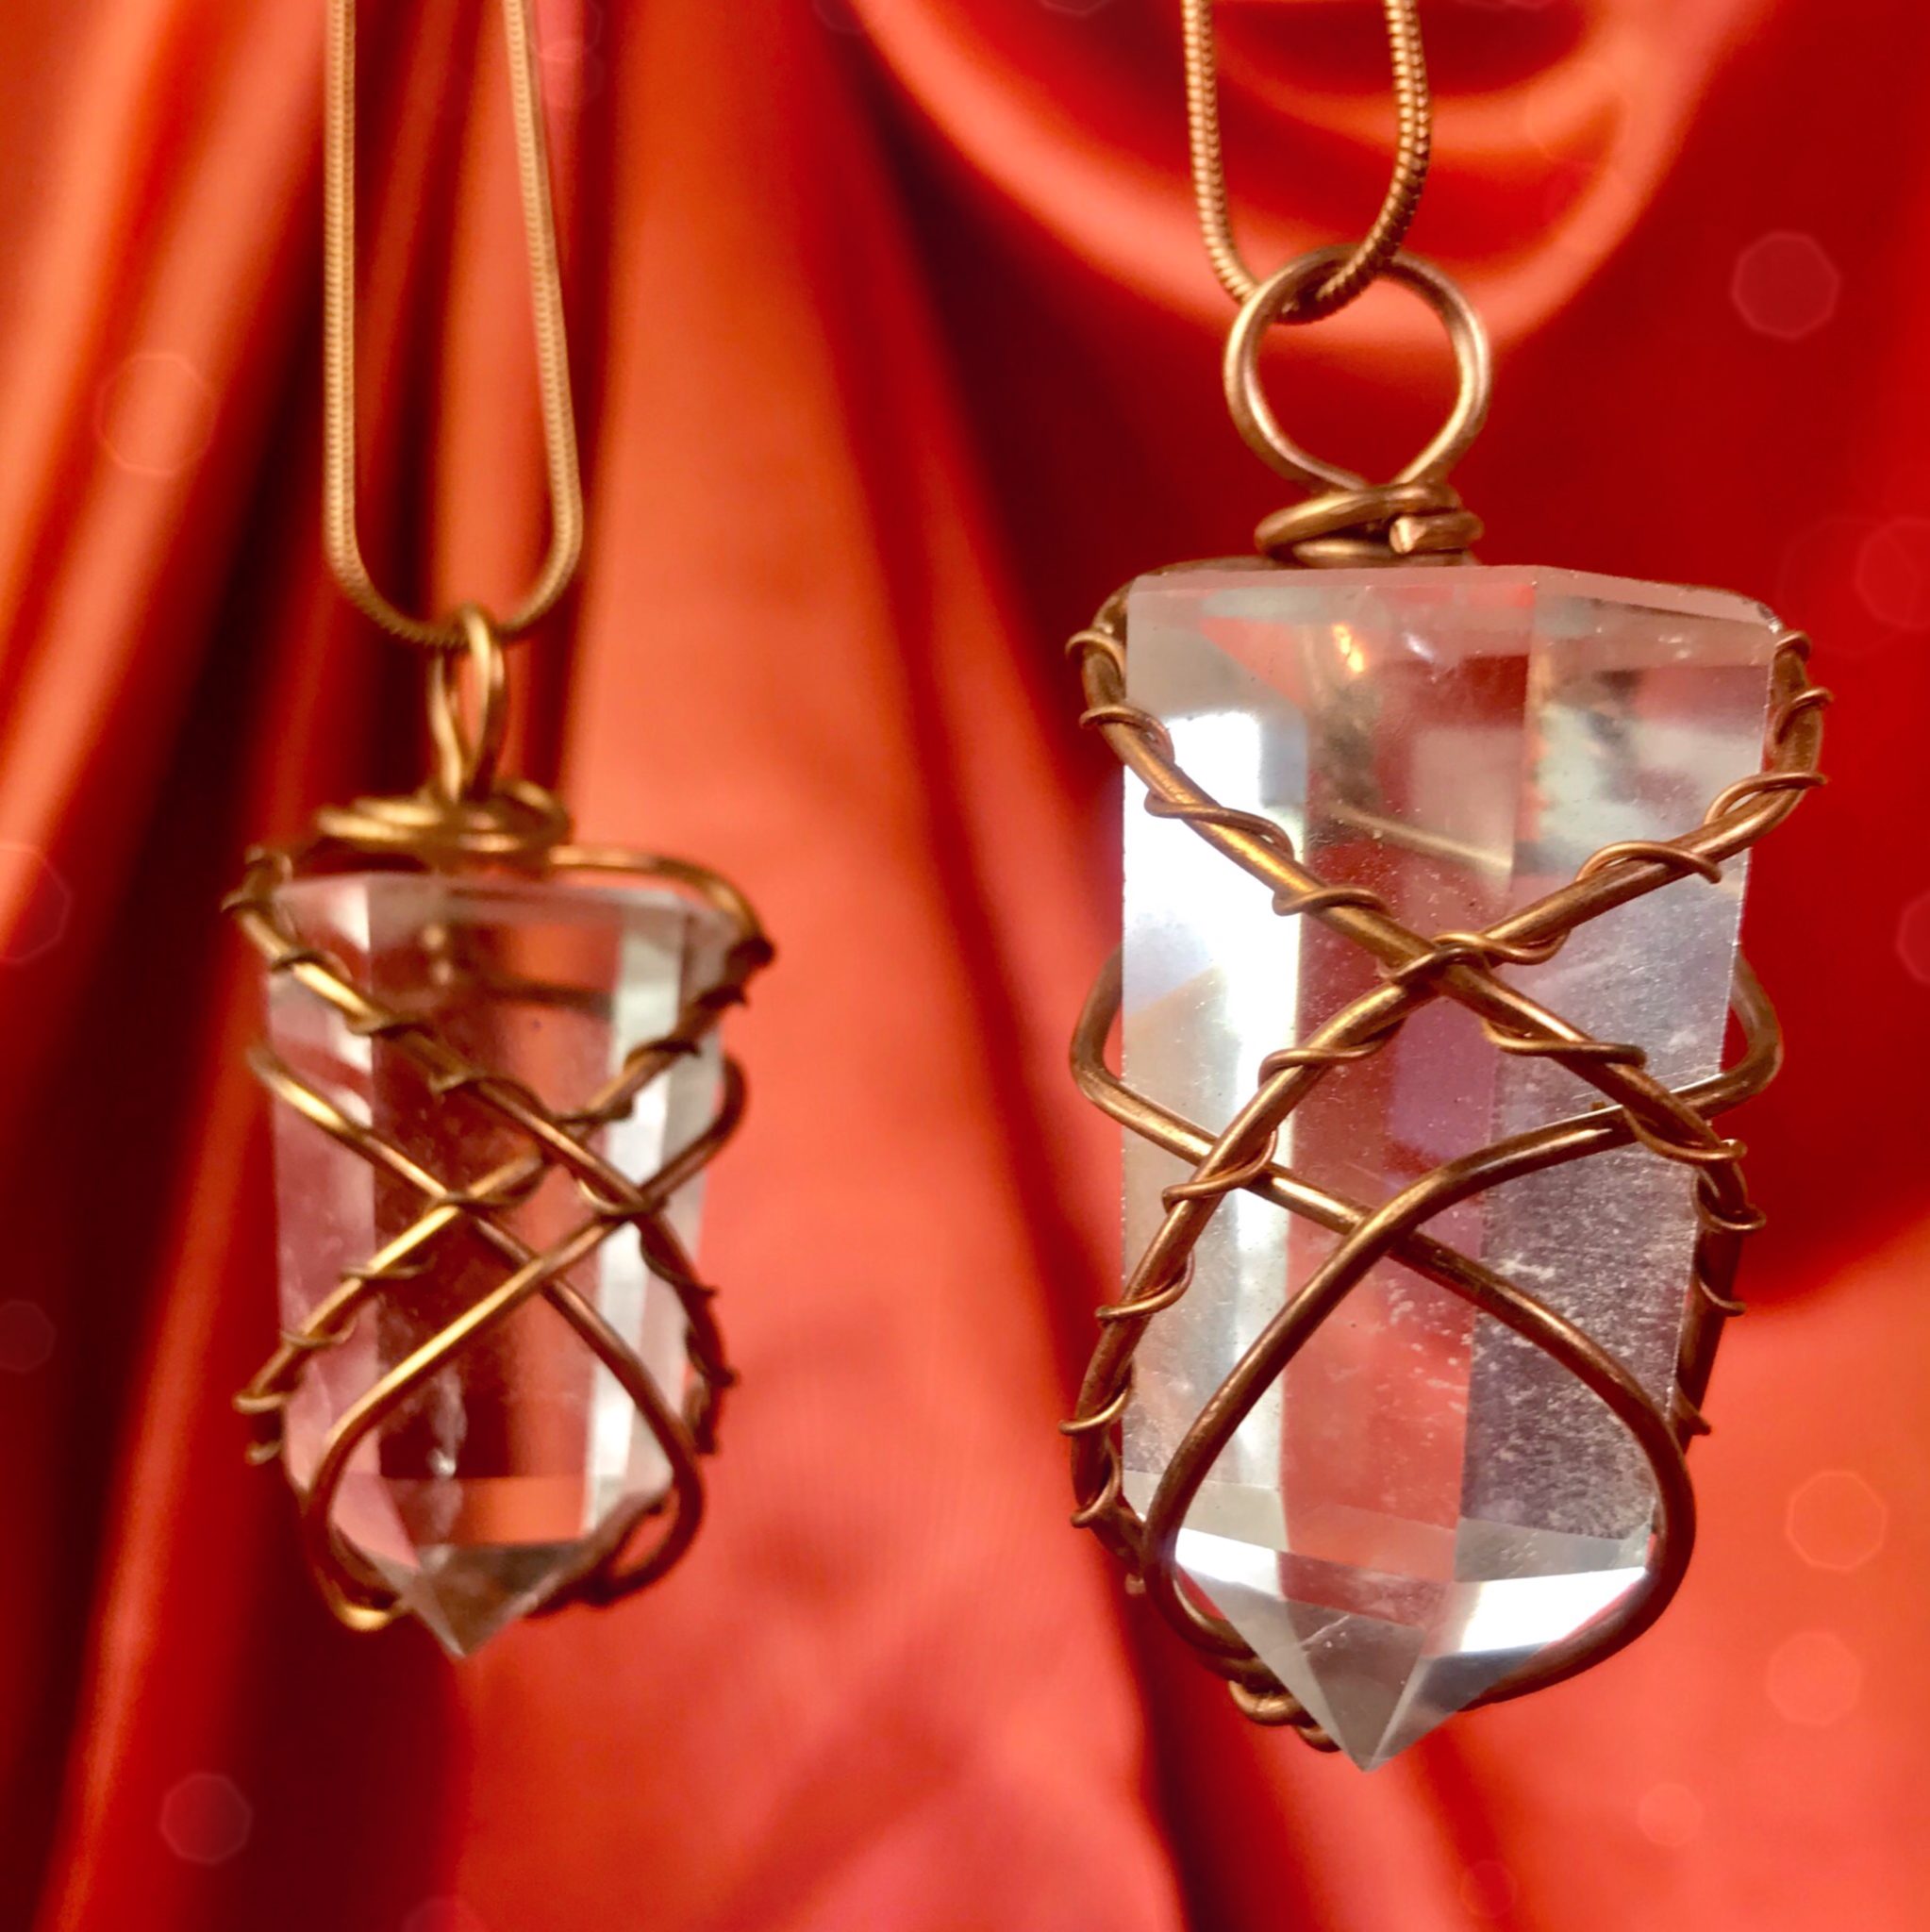 Copper swirls & quartz crystals